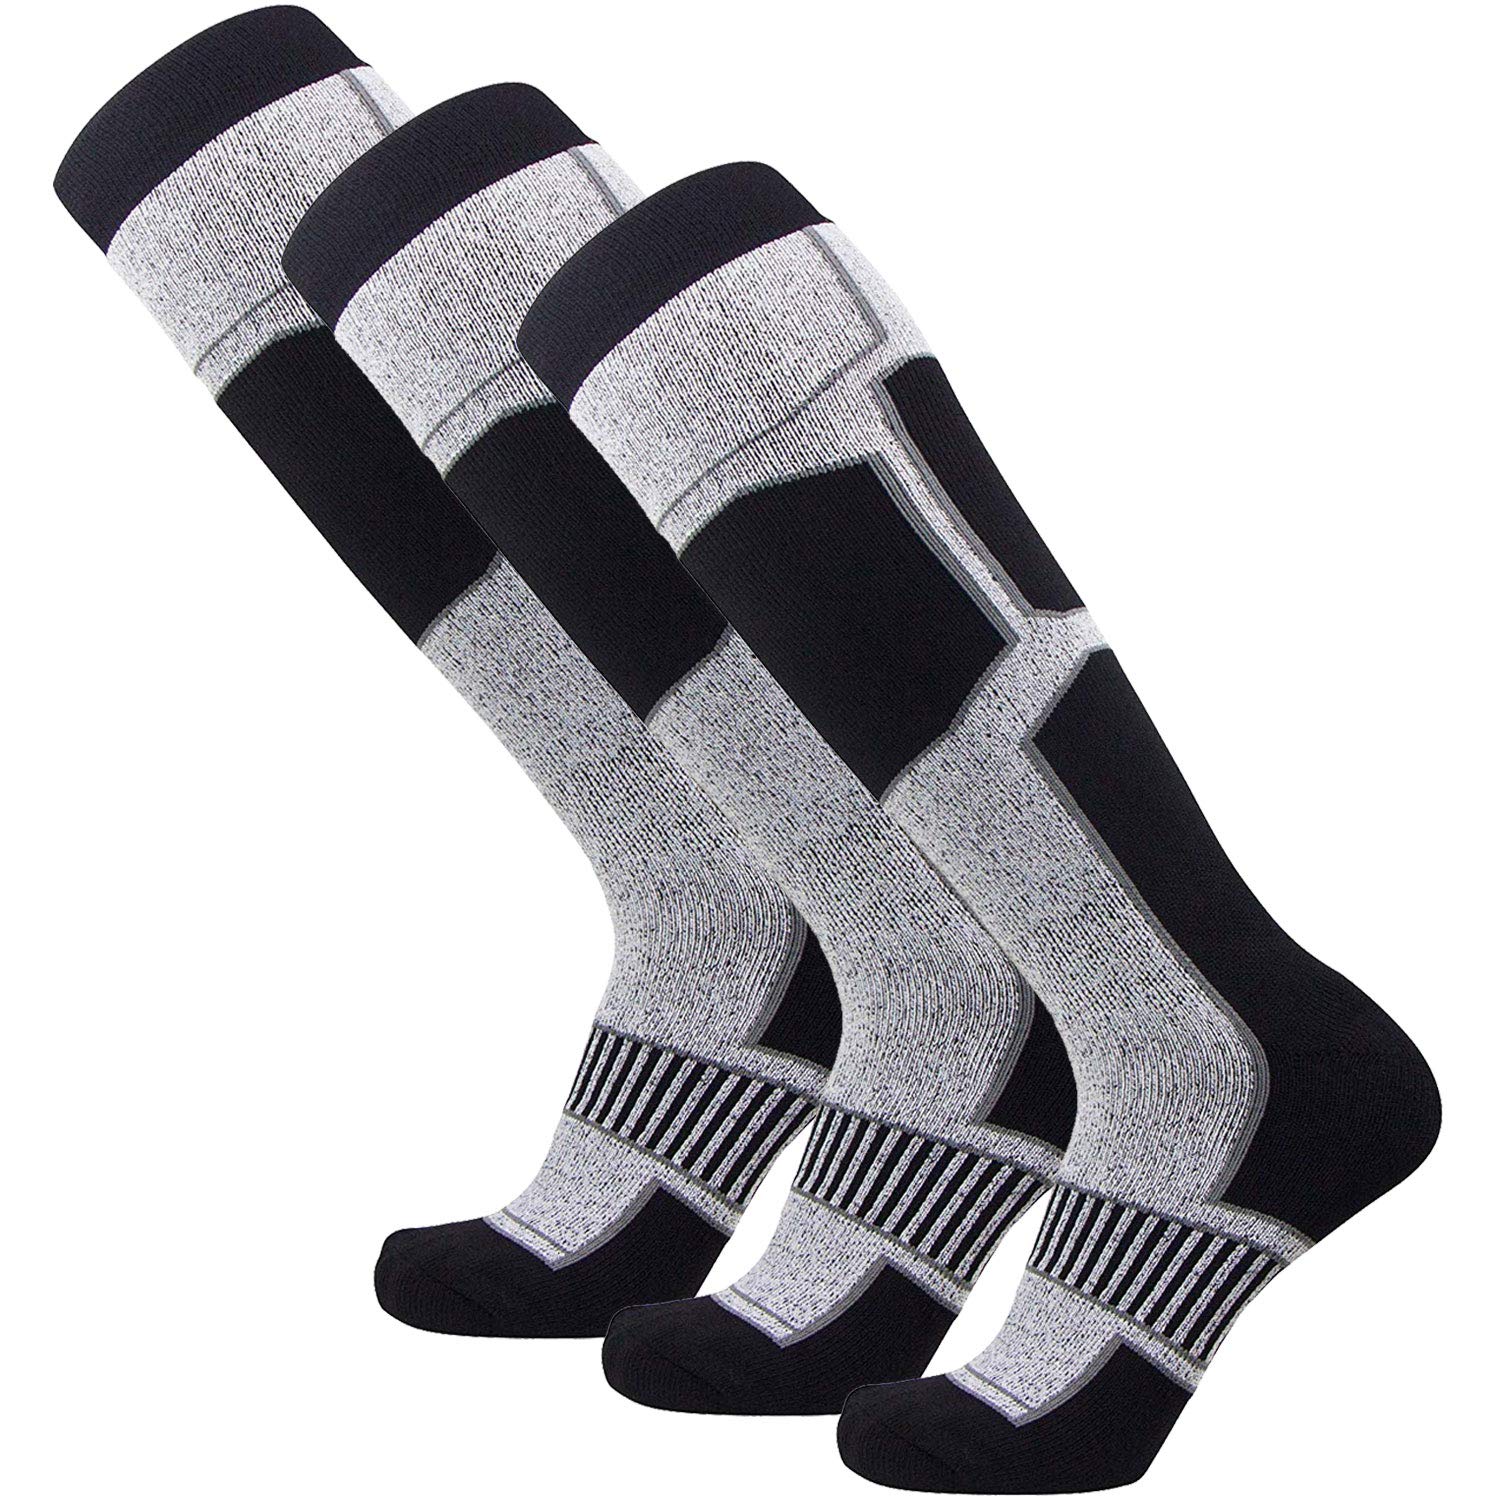 Snowboard Socks